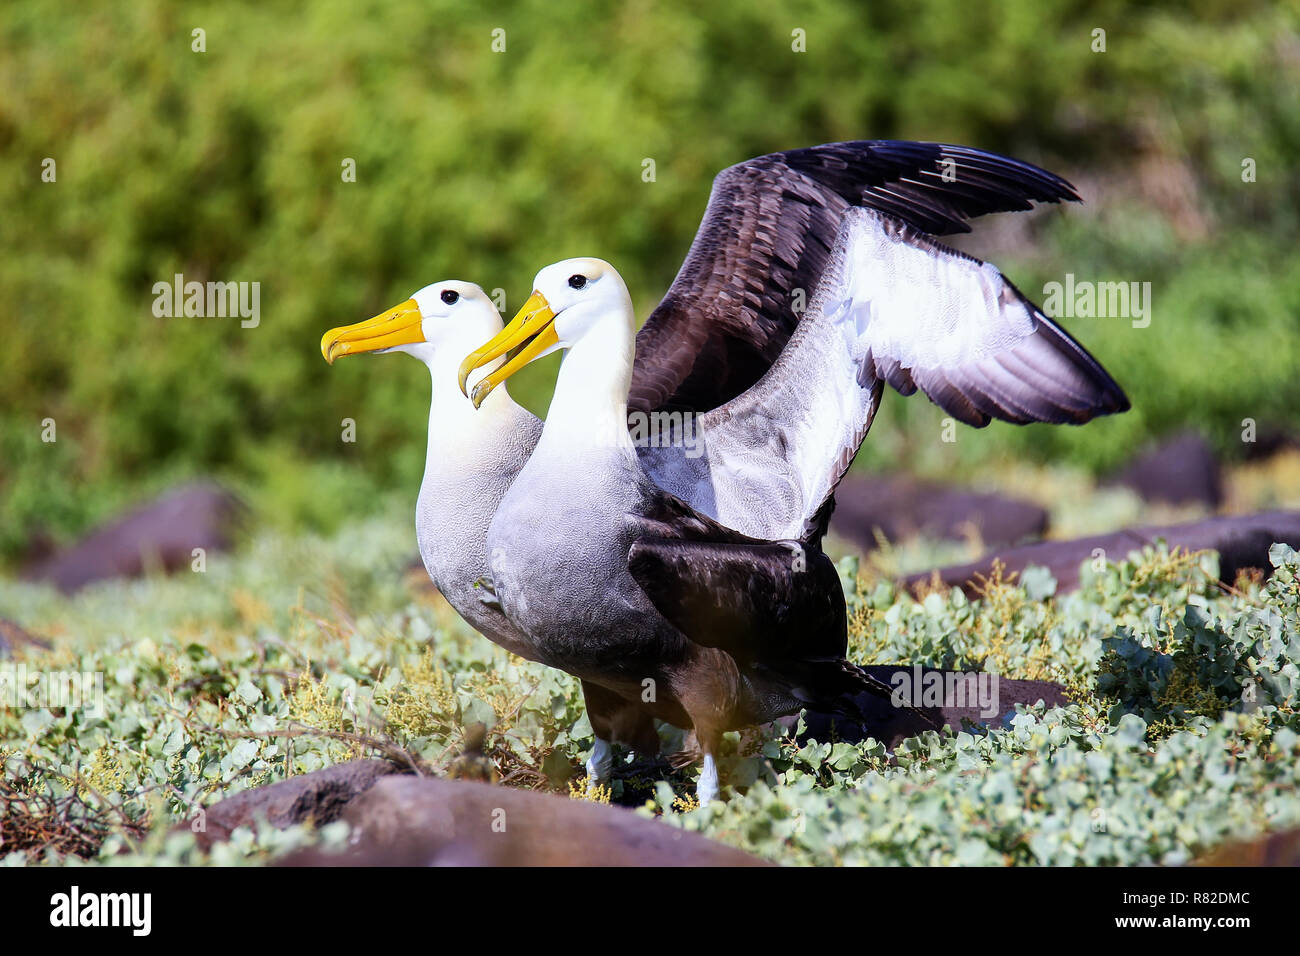 Winkte Albatrosse tun courtship Ritual am Espanola Island, Galapagos, Ecuador. Die winkte Albatross Rassen vor allem auf Espanola Island Stockfoto